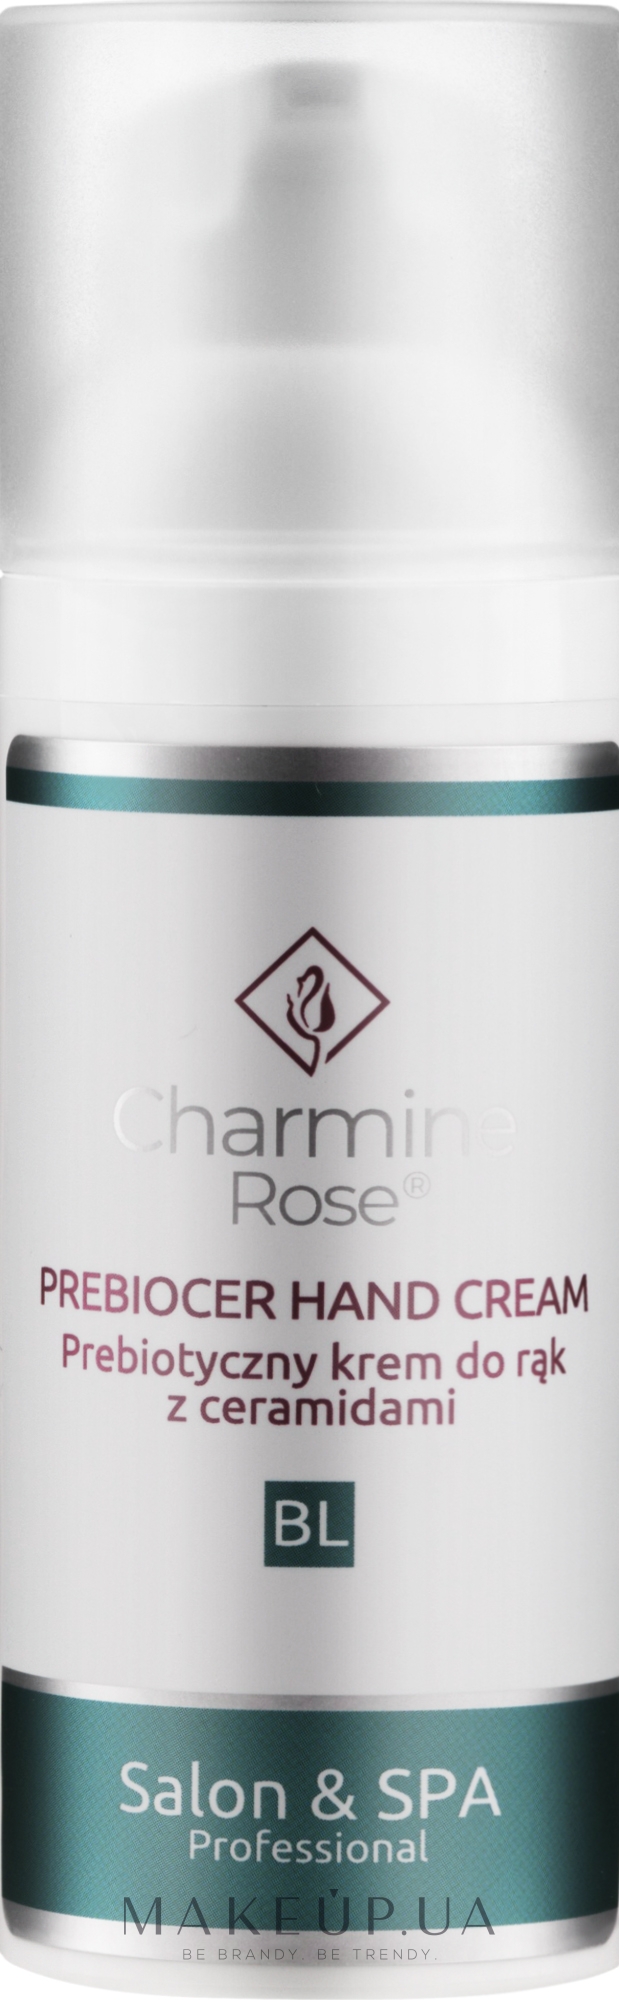 Пребіотичний крем для рук з керамідами - Charmine Rose Prebiocer Hand Cream — фото 50ml